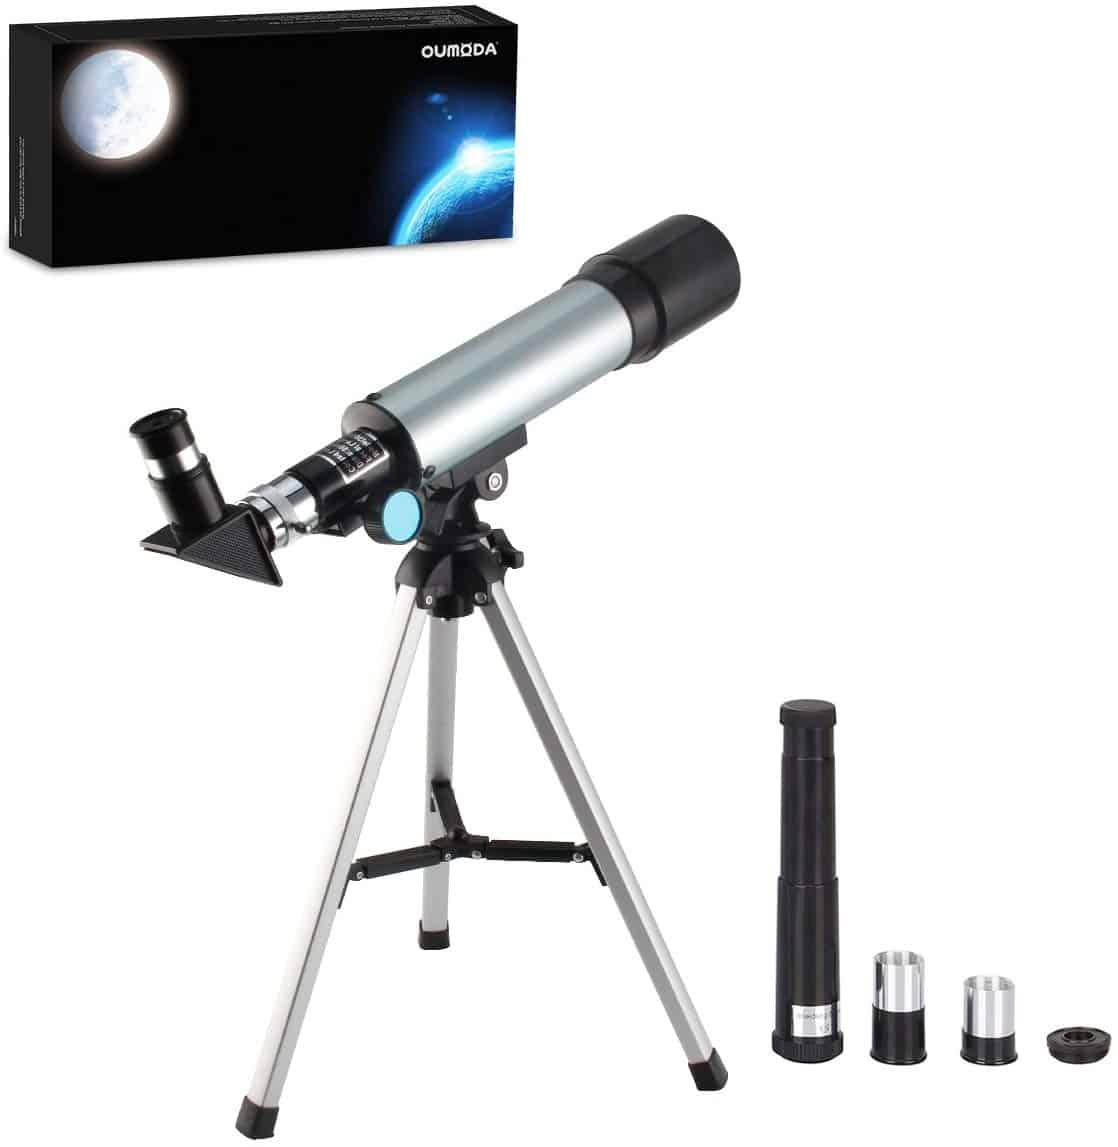 Oumoda Telescope